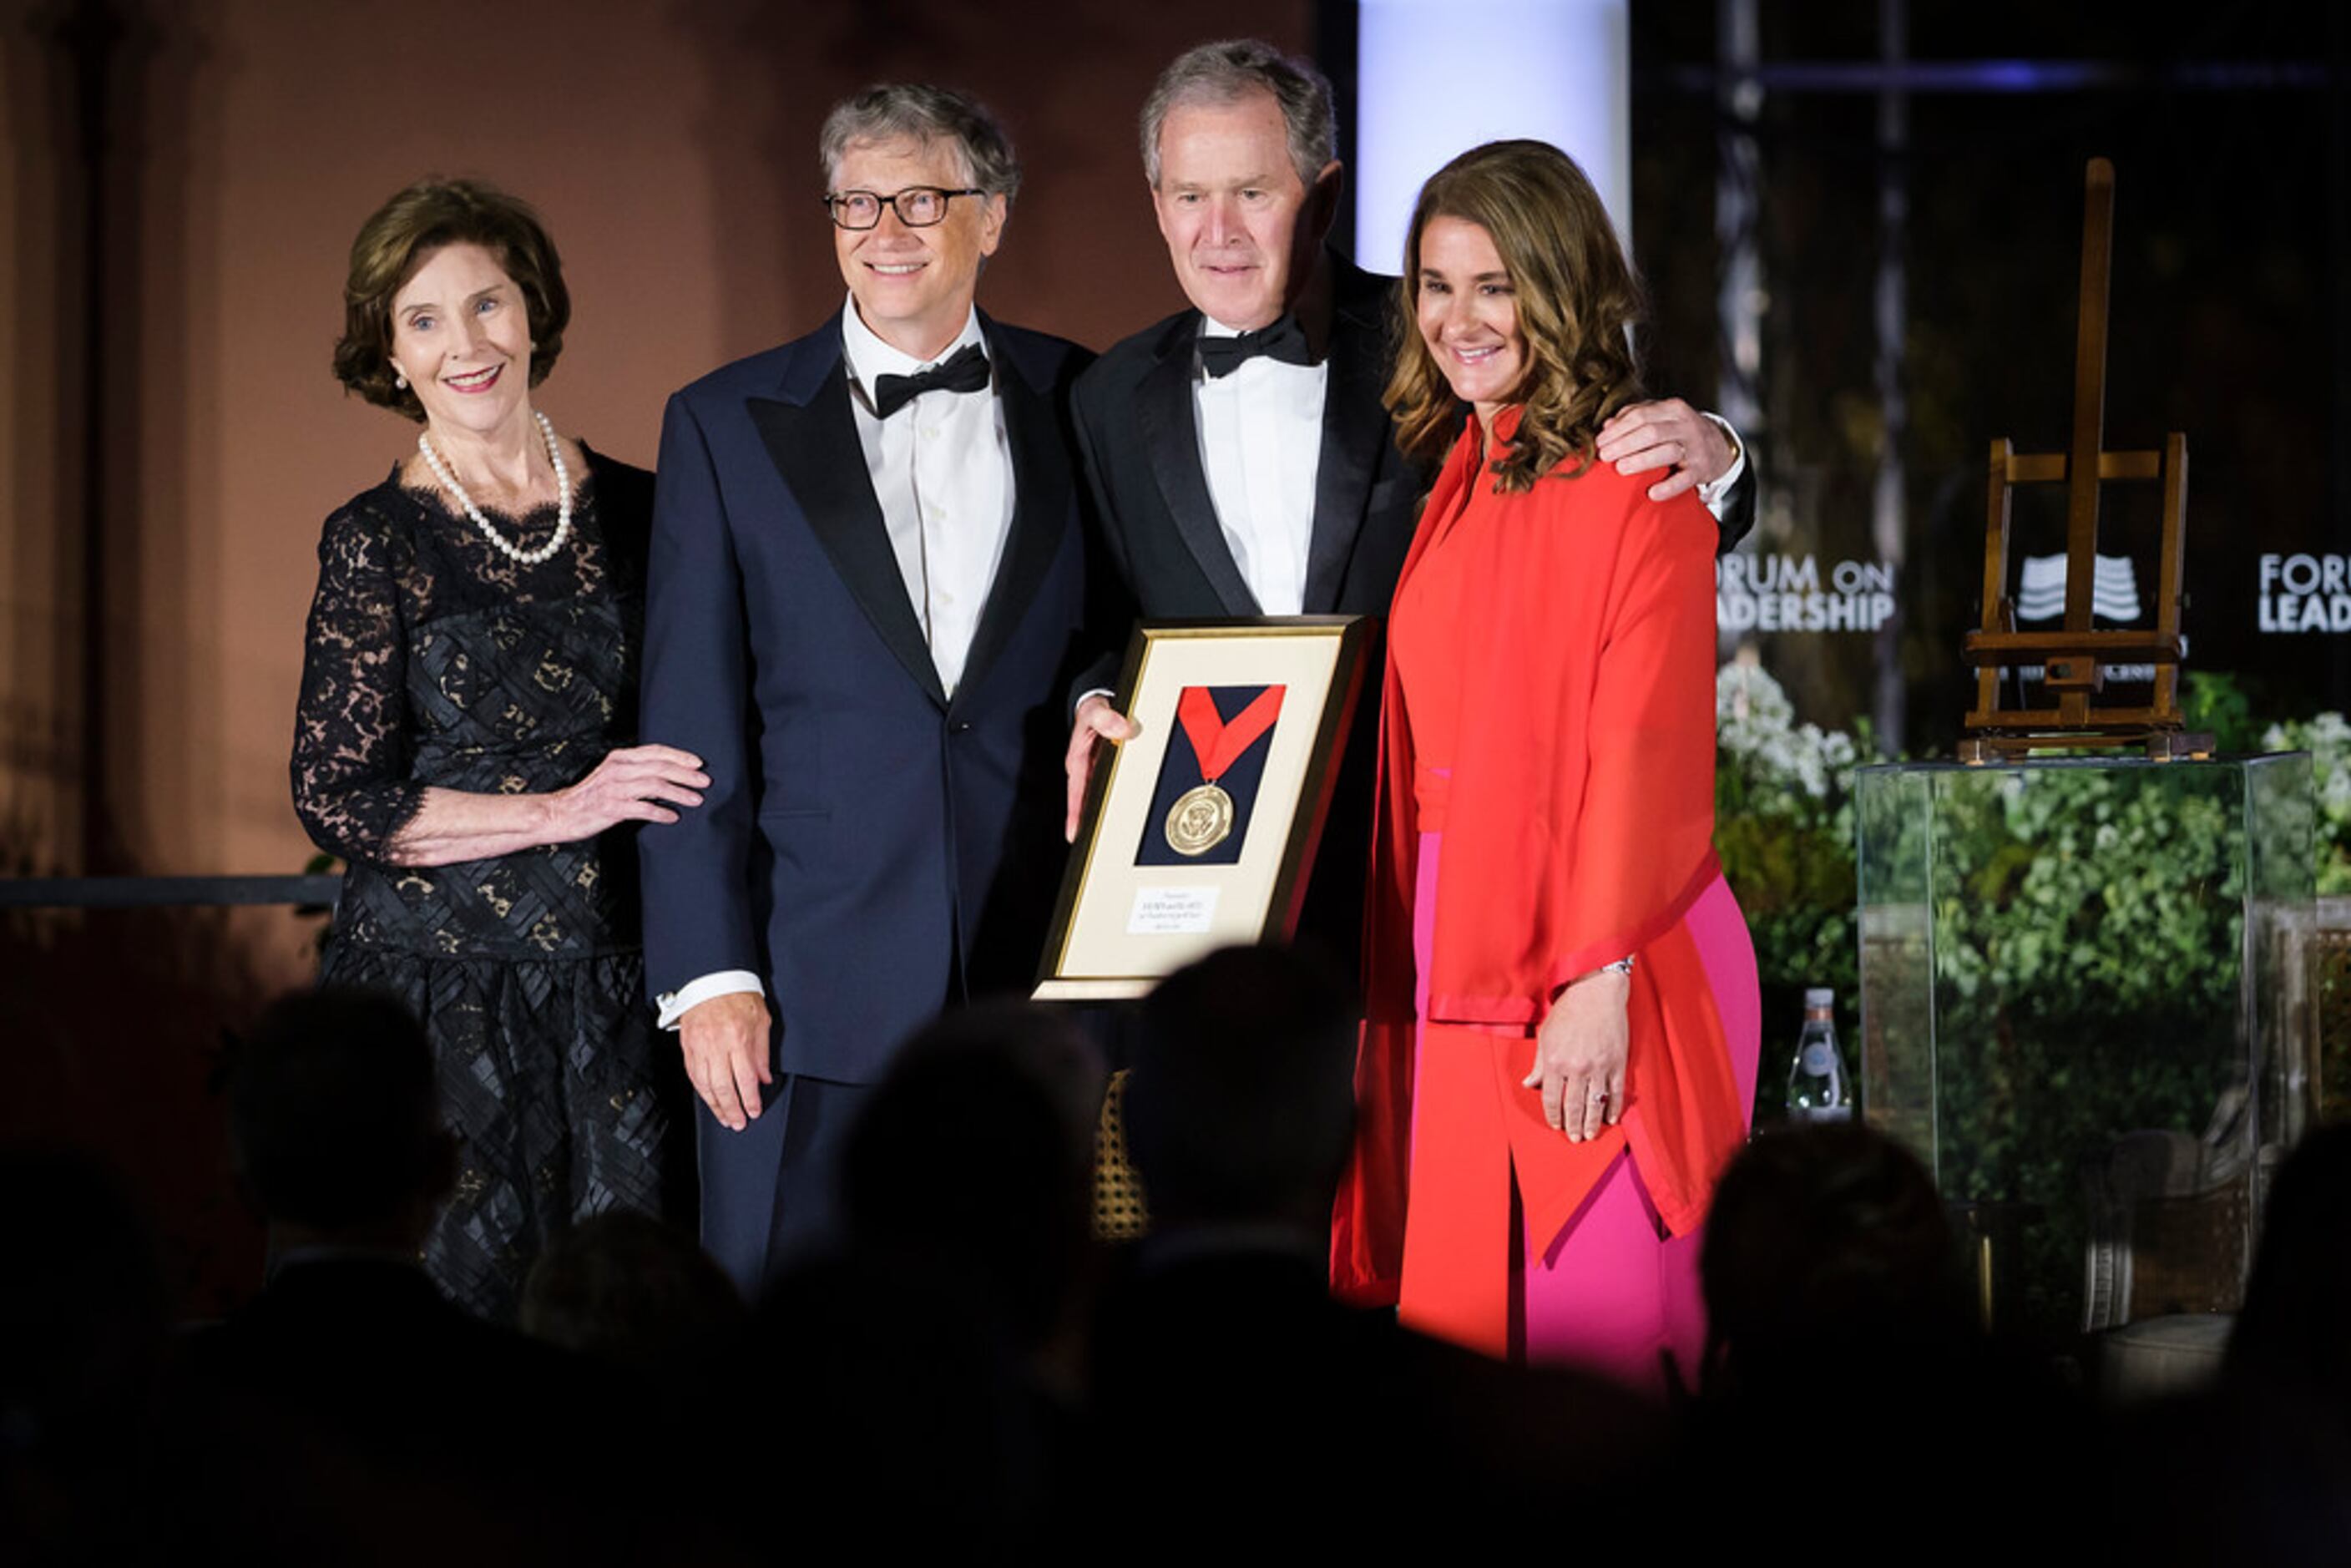 Bill and Melinda Gates received the George W. Bush Medal for Distinguished Leadership award...